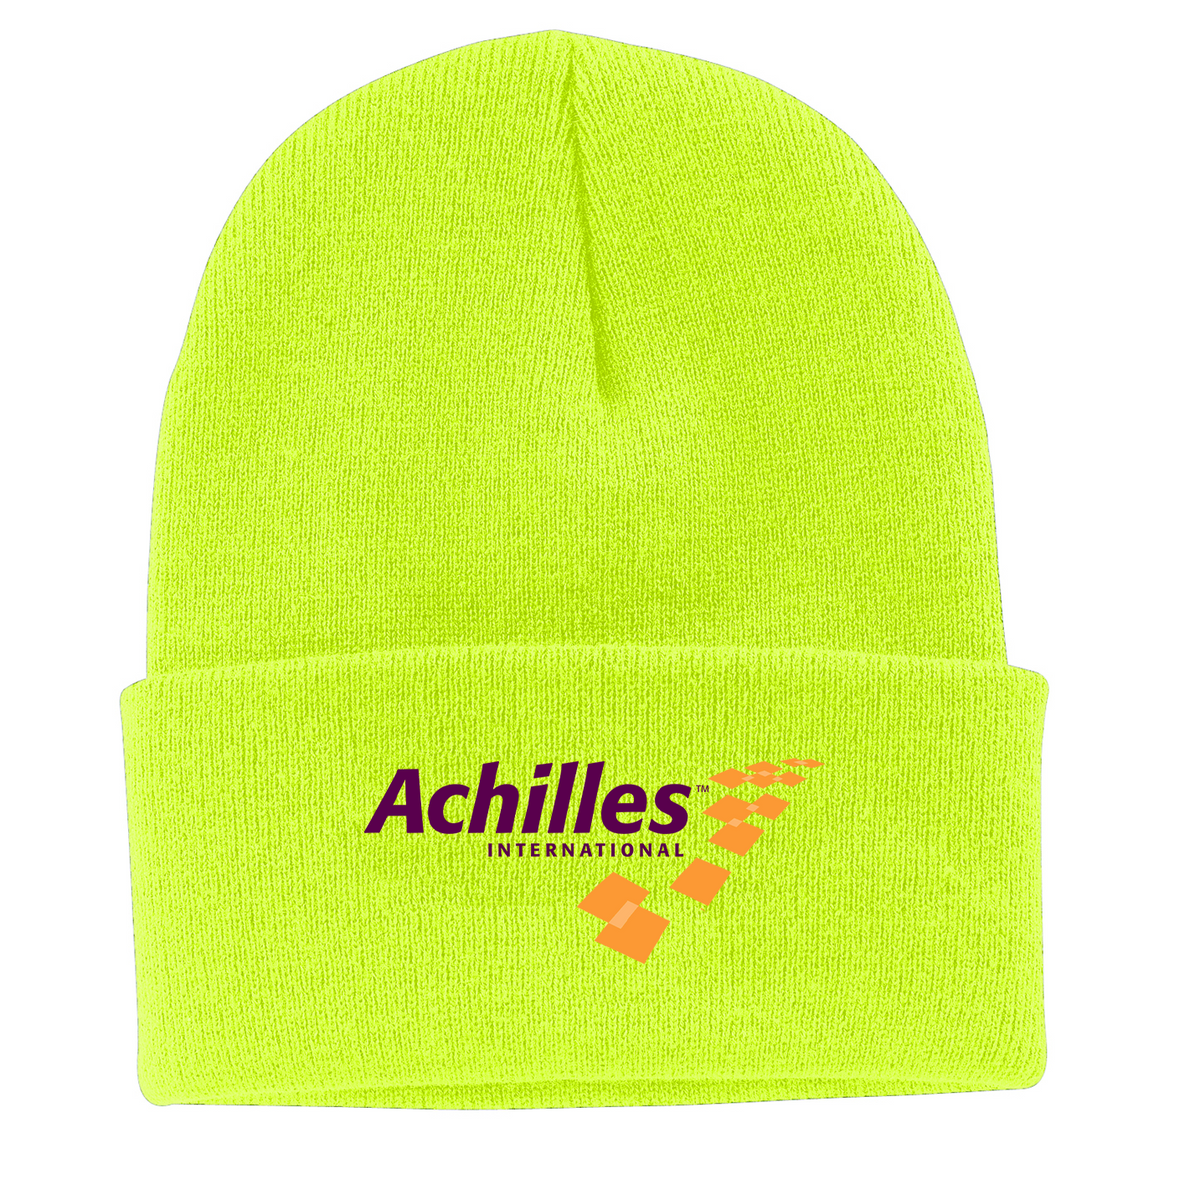 Achilles International Knit Beanie